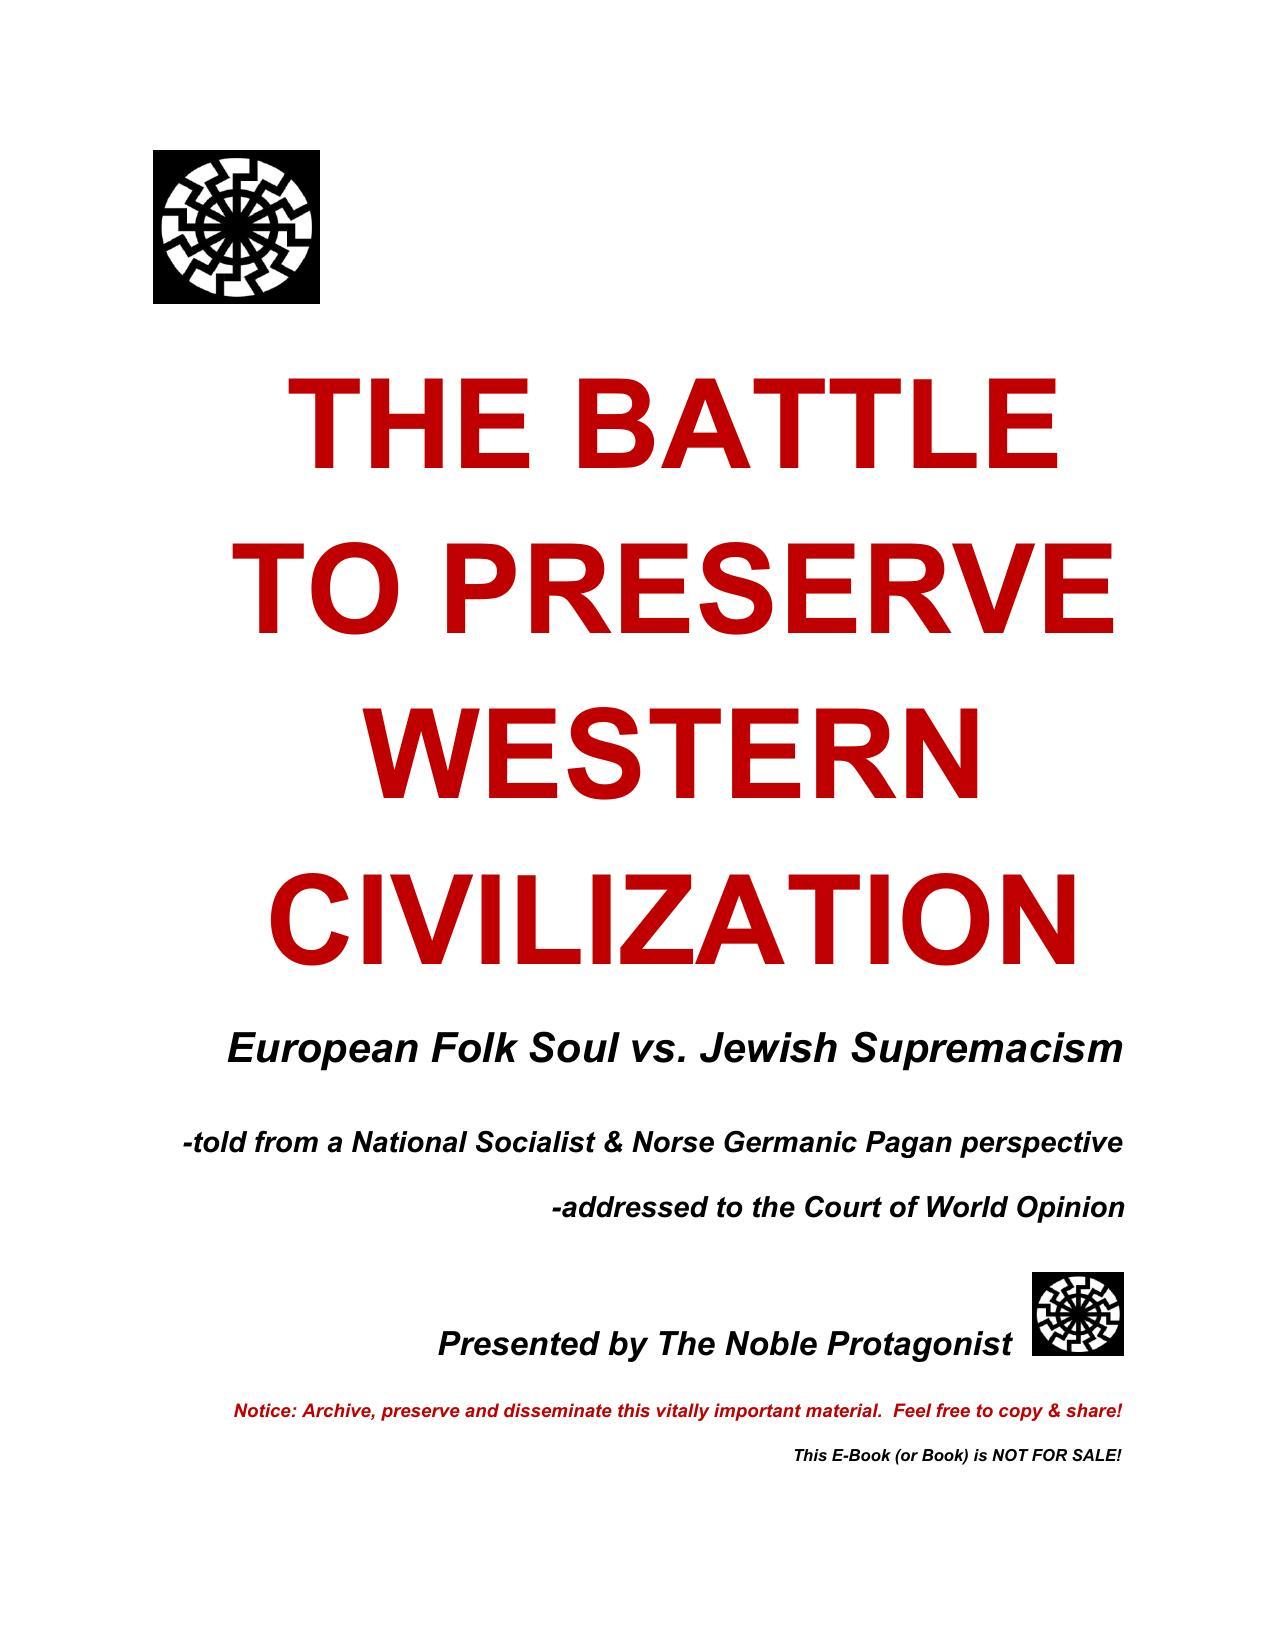 The Battle To Preserve Western Civilization - European Folk Soul vs. Jewish Supremacism (2019) by DJ Noble Protagonist